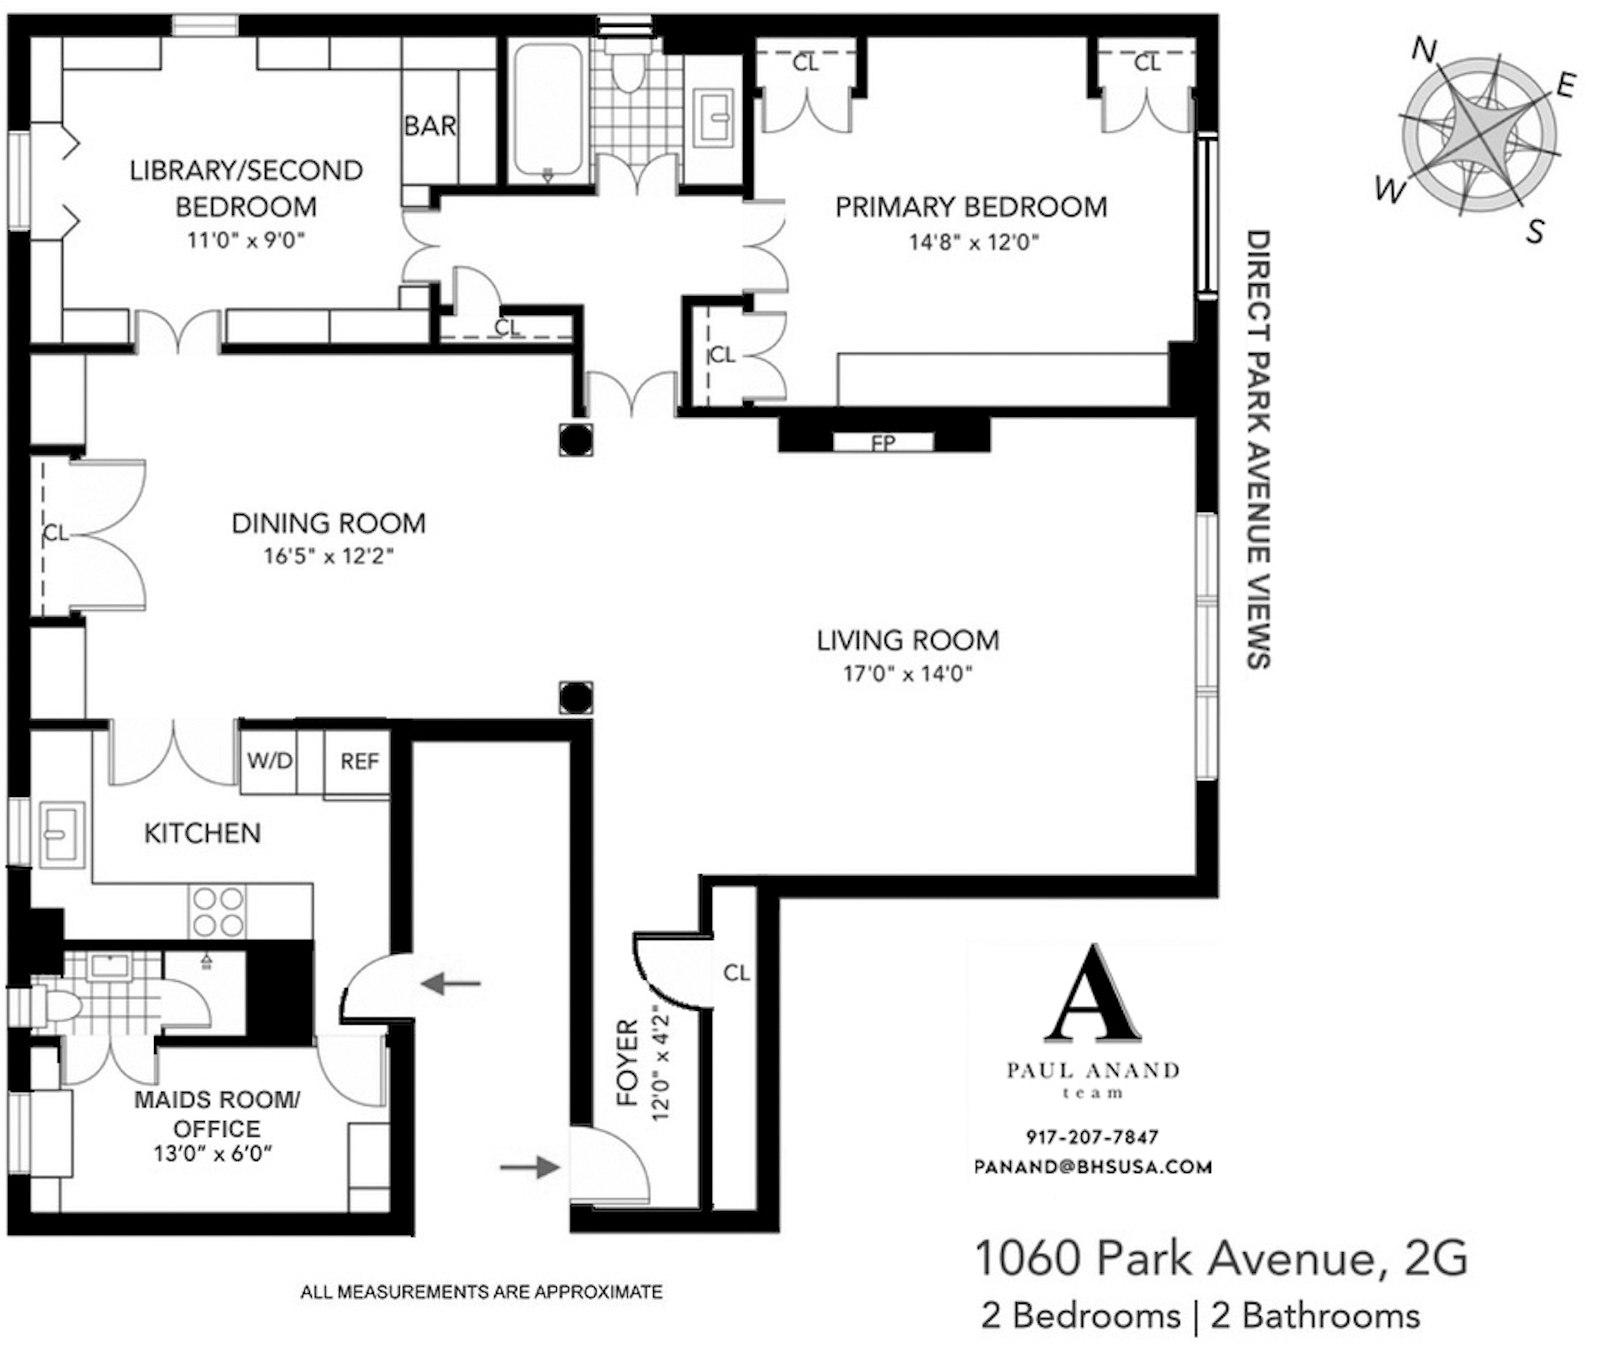 Floorplan for 1060 Park Avenue, 2G